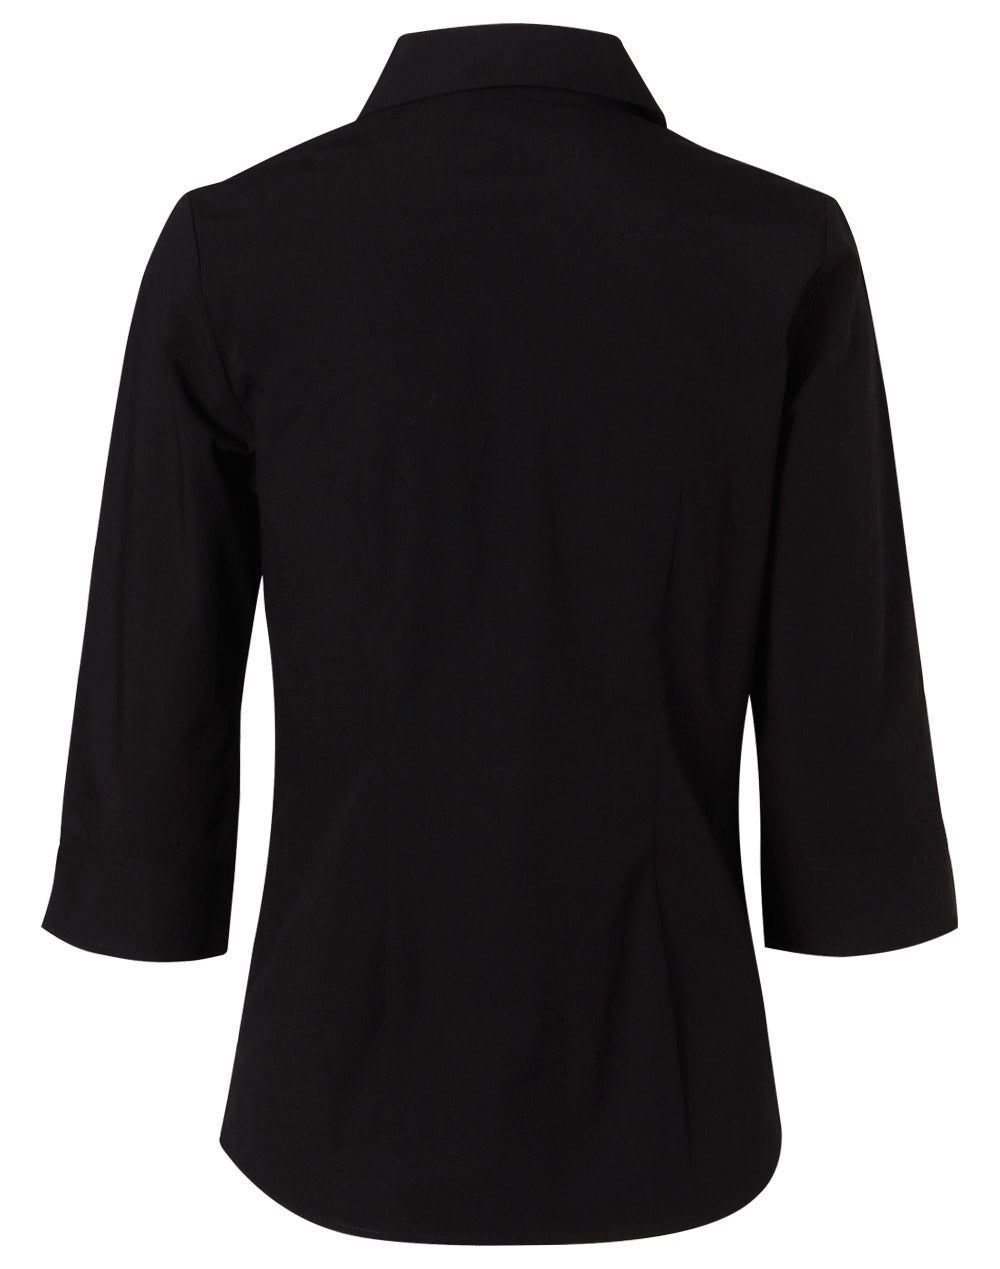 Benchmark M8020Q Women's Cotton/Poly Stretch 3/4 Sleeve Shirt